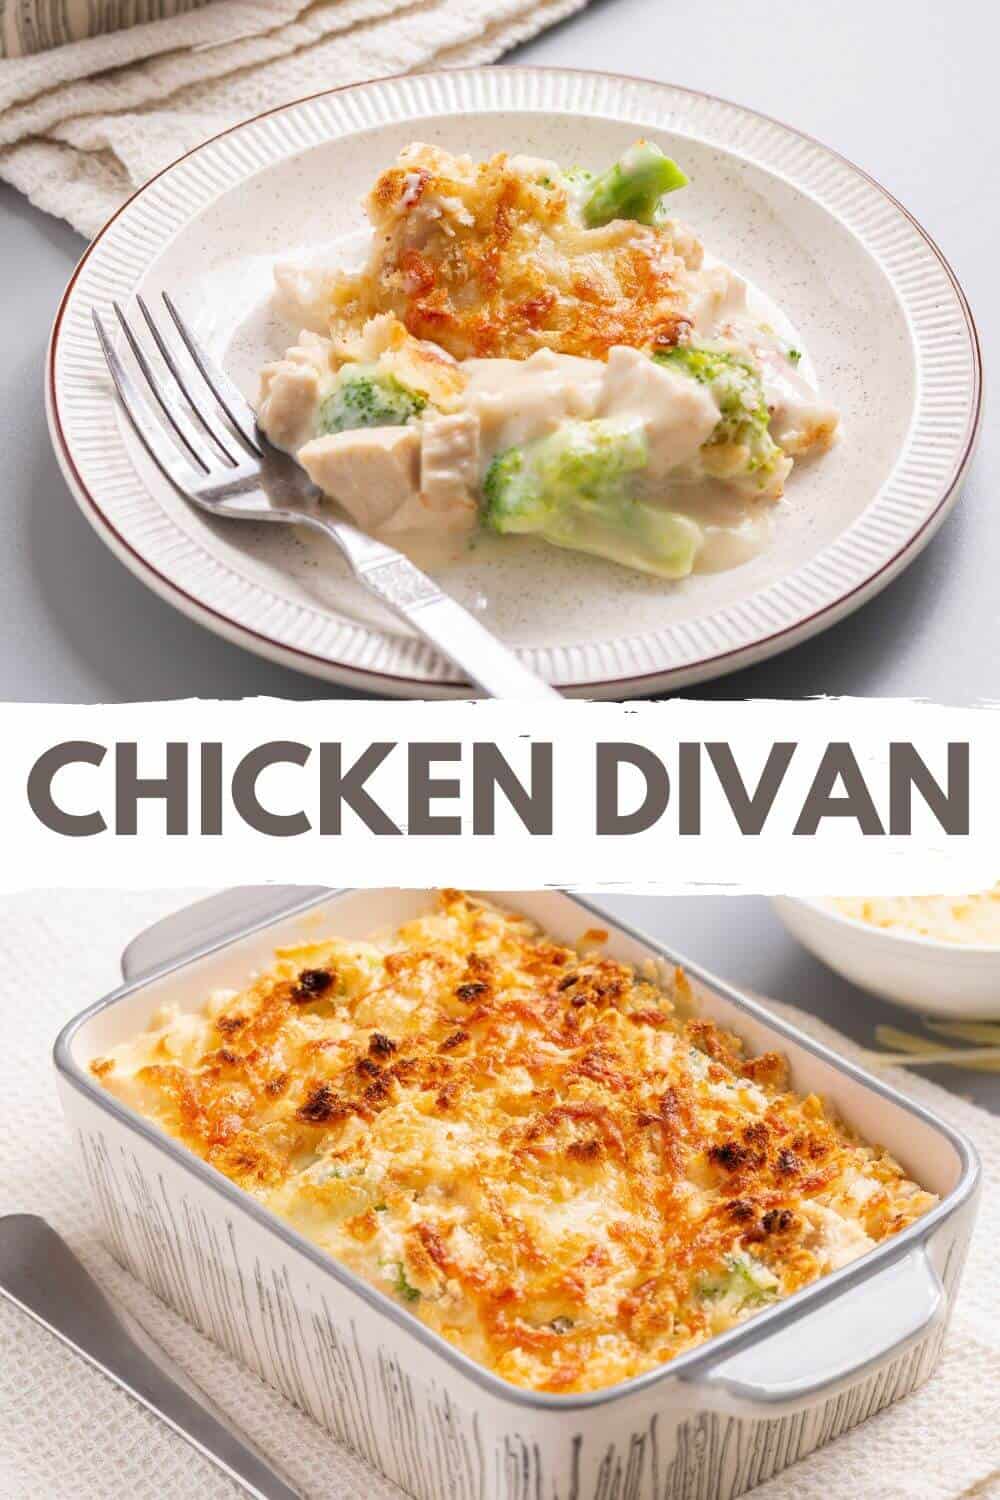 Chicken divan with recipe title text.